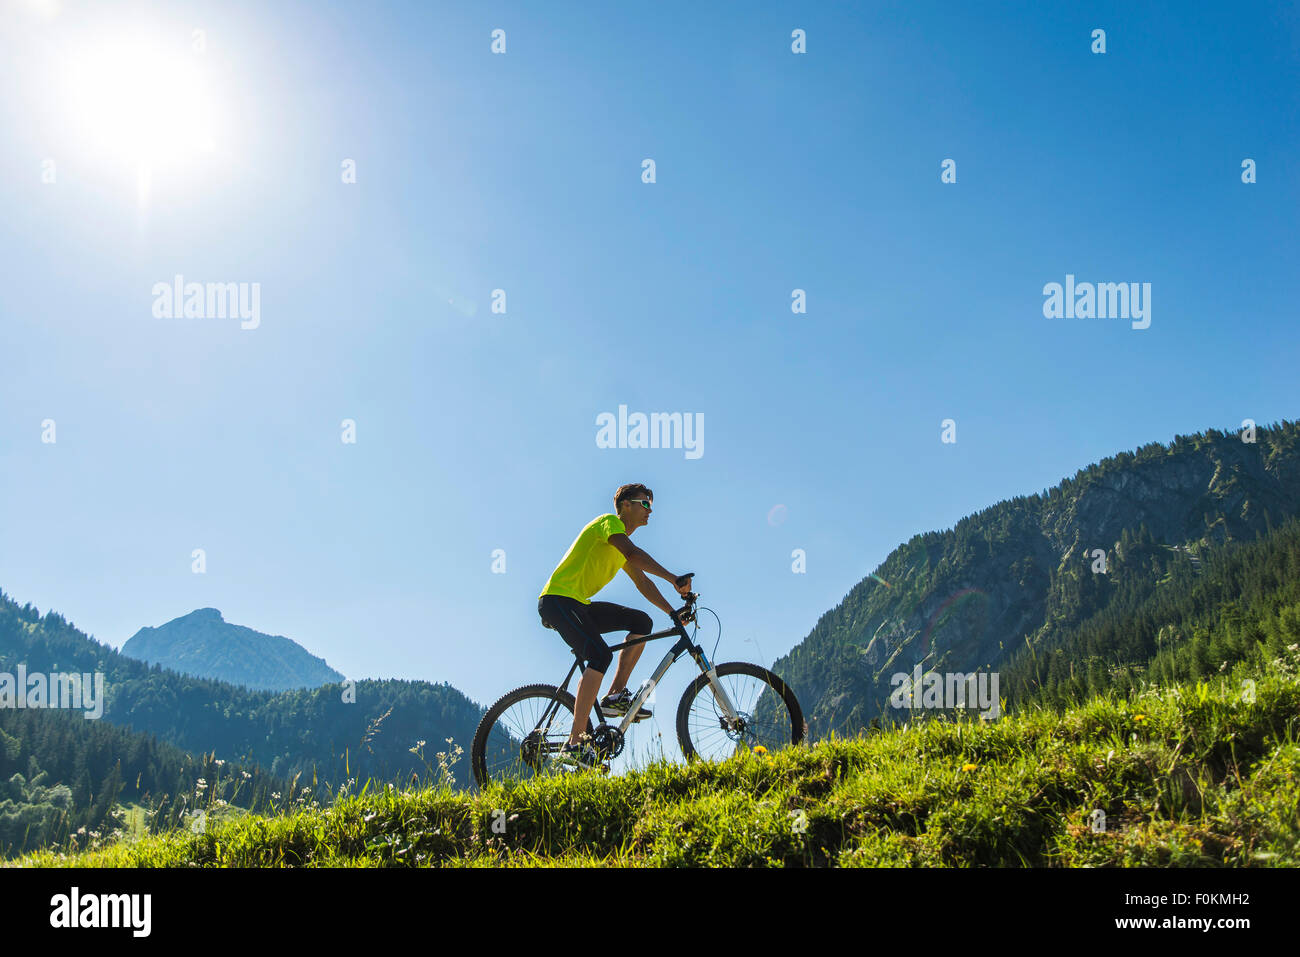 Austria, Tyrol, Tannheim Valley, young man on mountain bike in alpine landscape Stock Photo